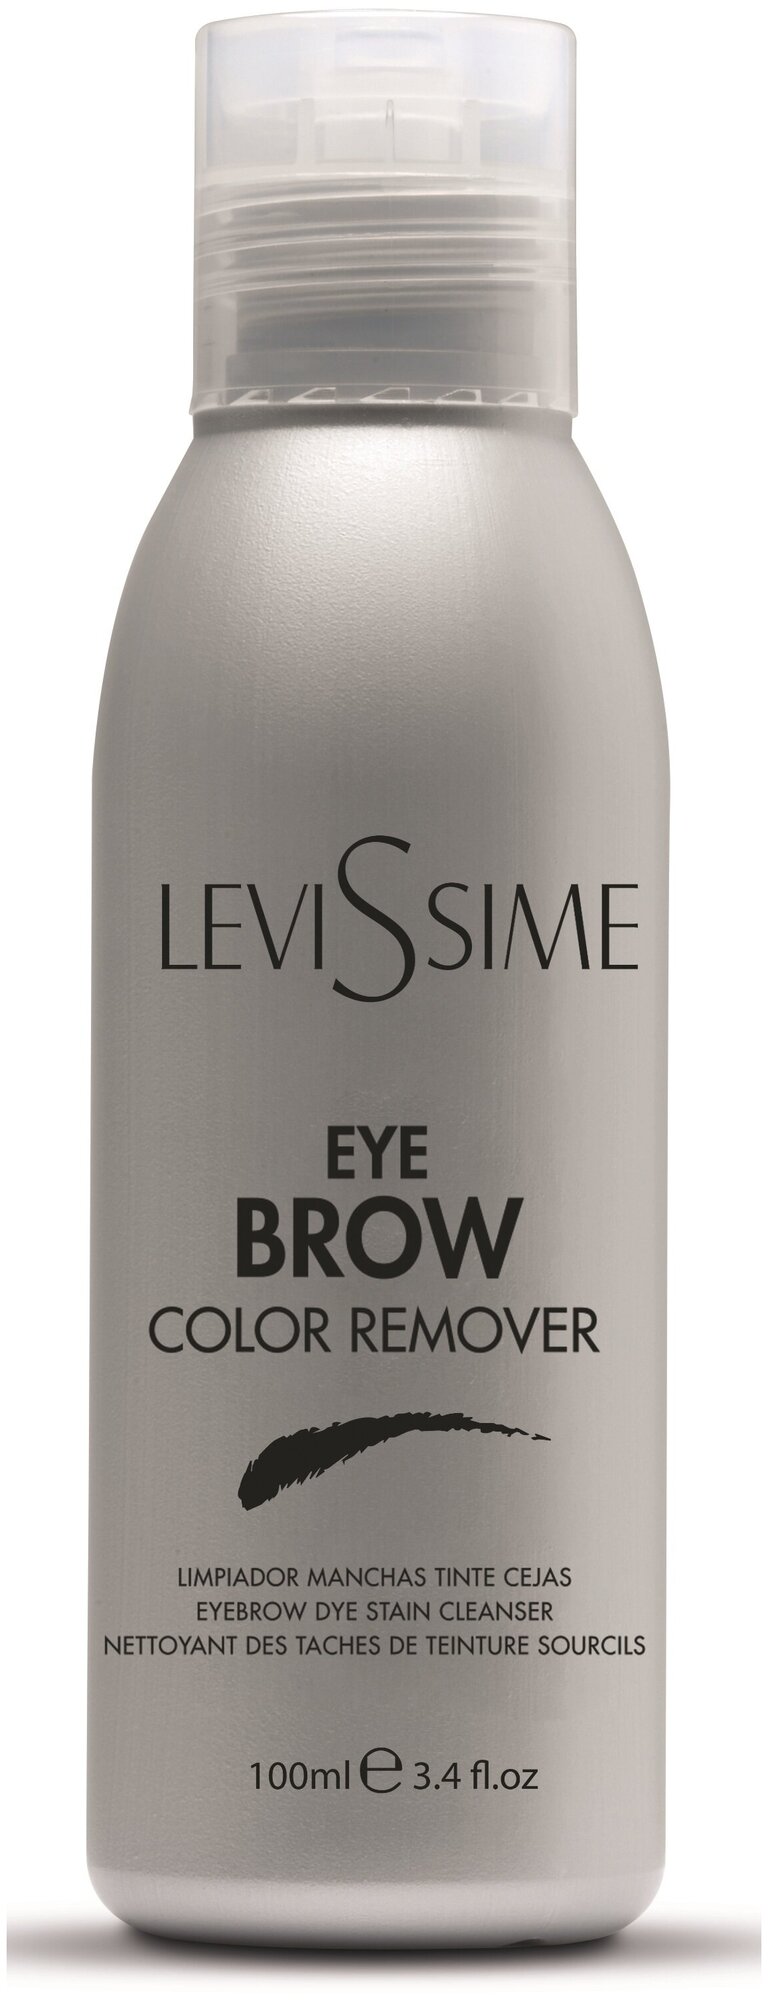 Лосьон EYE BROW для снятия краски с кожи LEVISSIME 100 мл